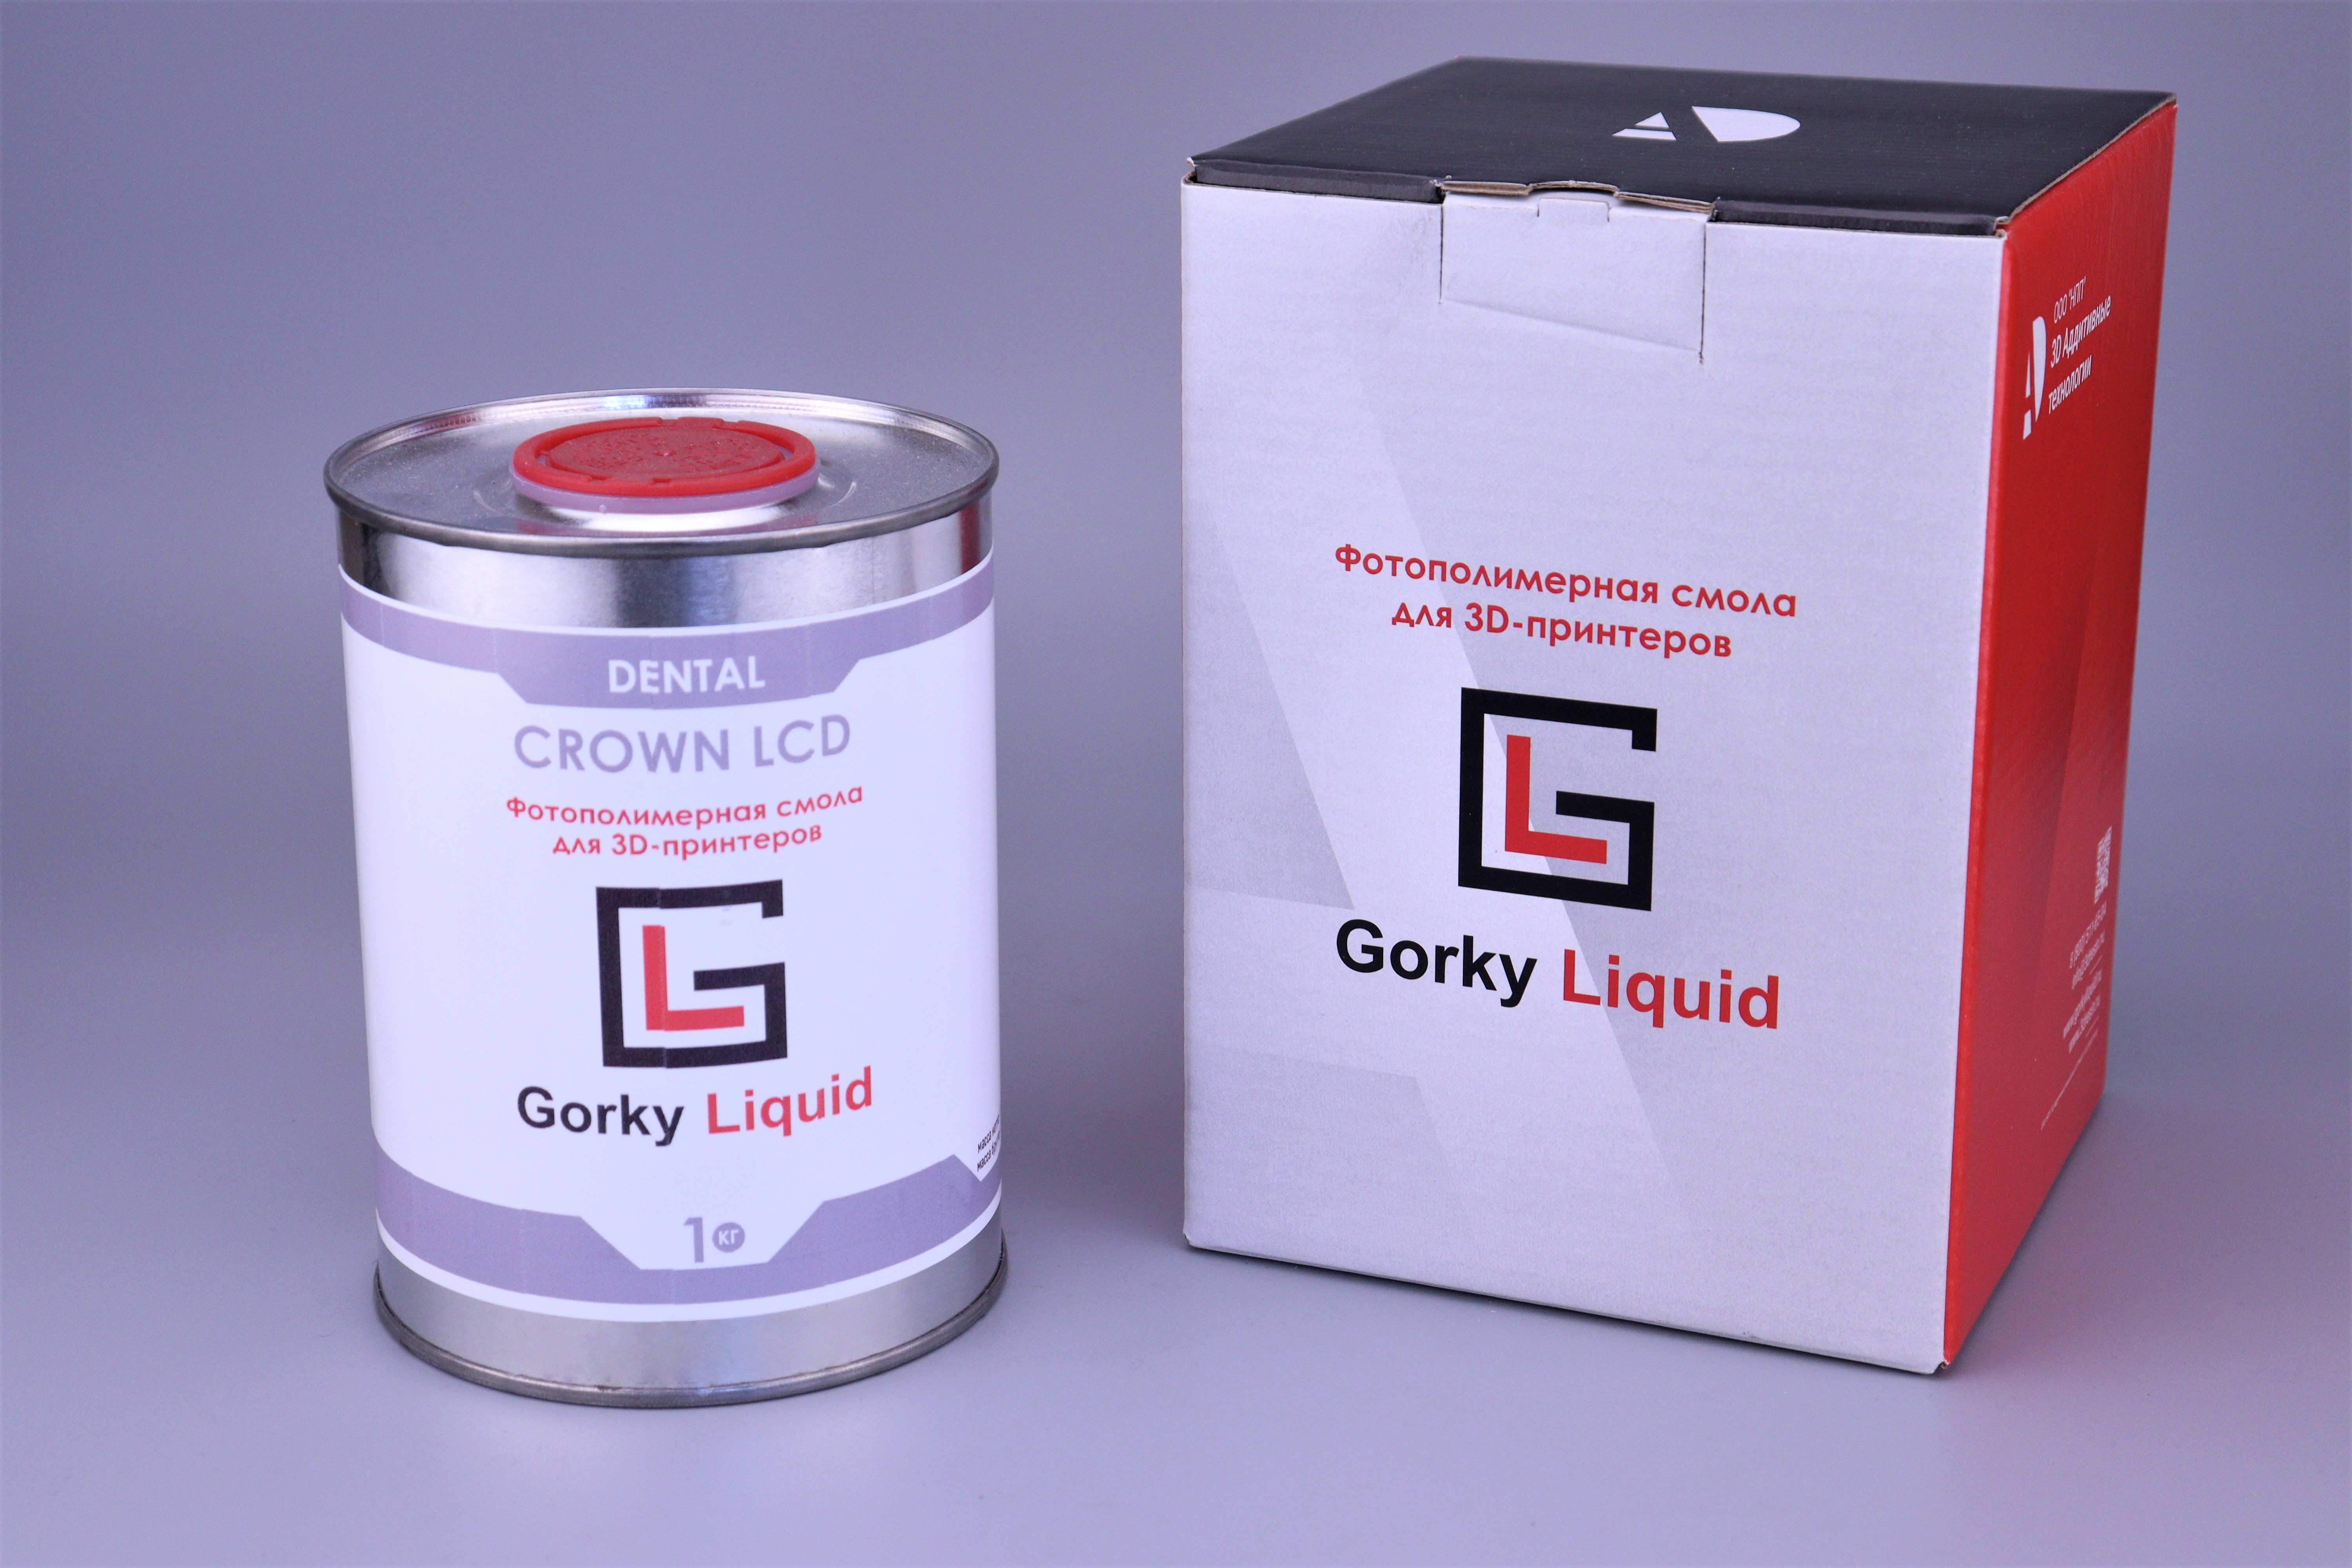 "Dental Crown" A2 LCD/DLP 1 кг фотополимерная смола Gorky Liquid